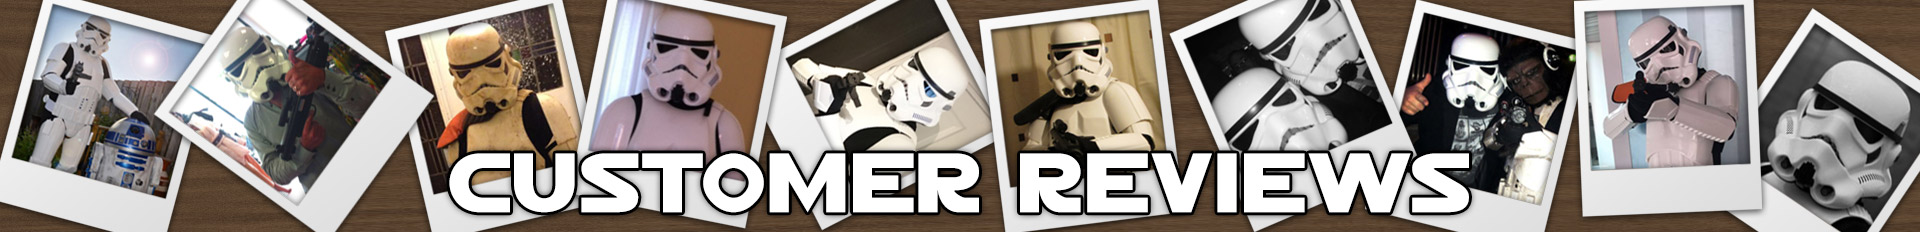 Stormtrooper-Costumes.com Customer Reviews